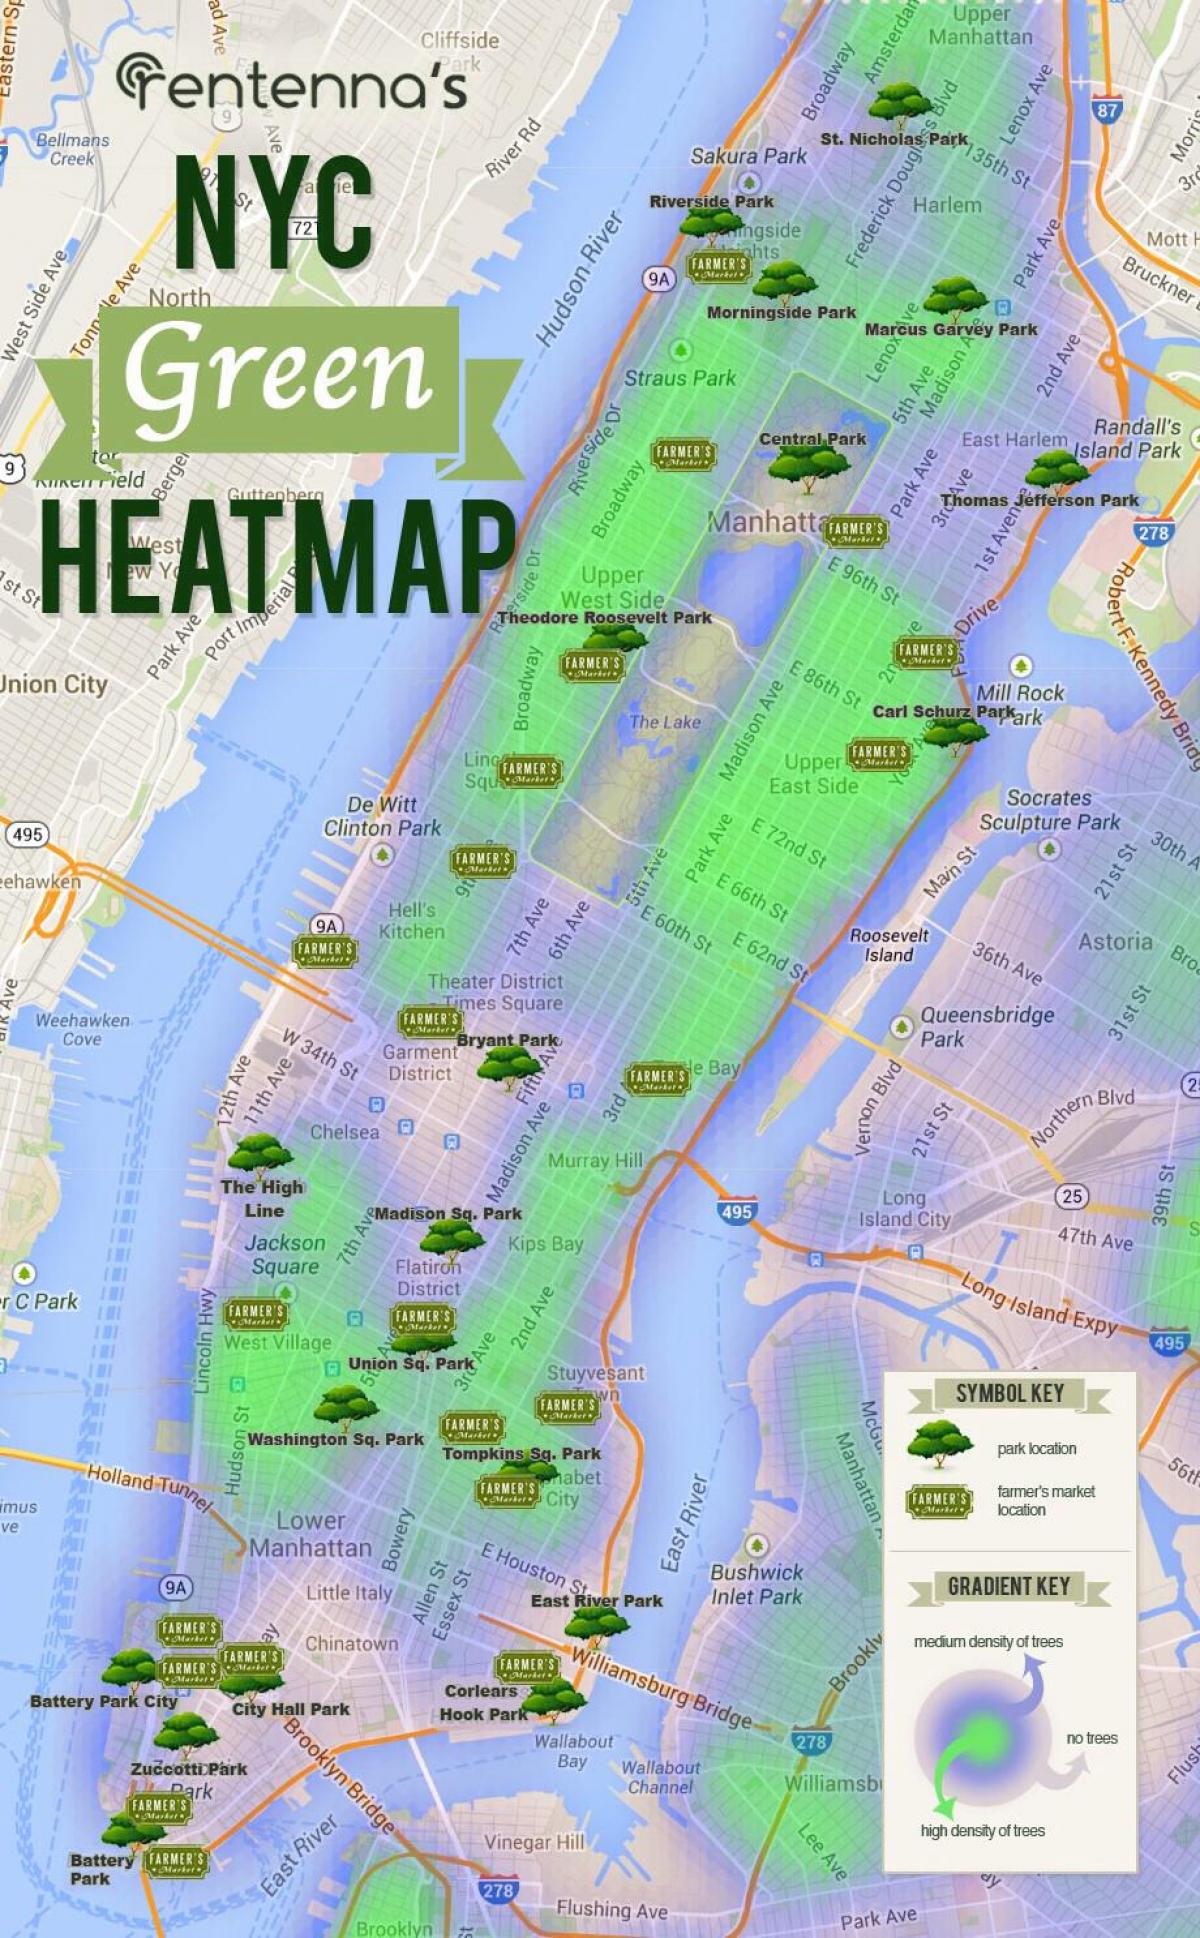 kart over Manhattan parker